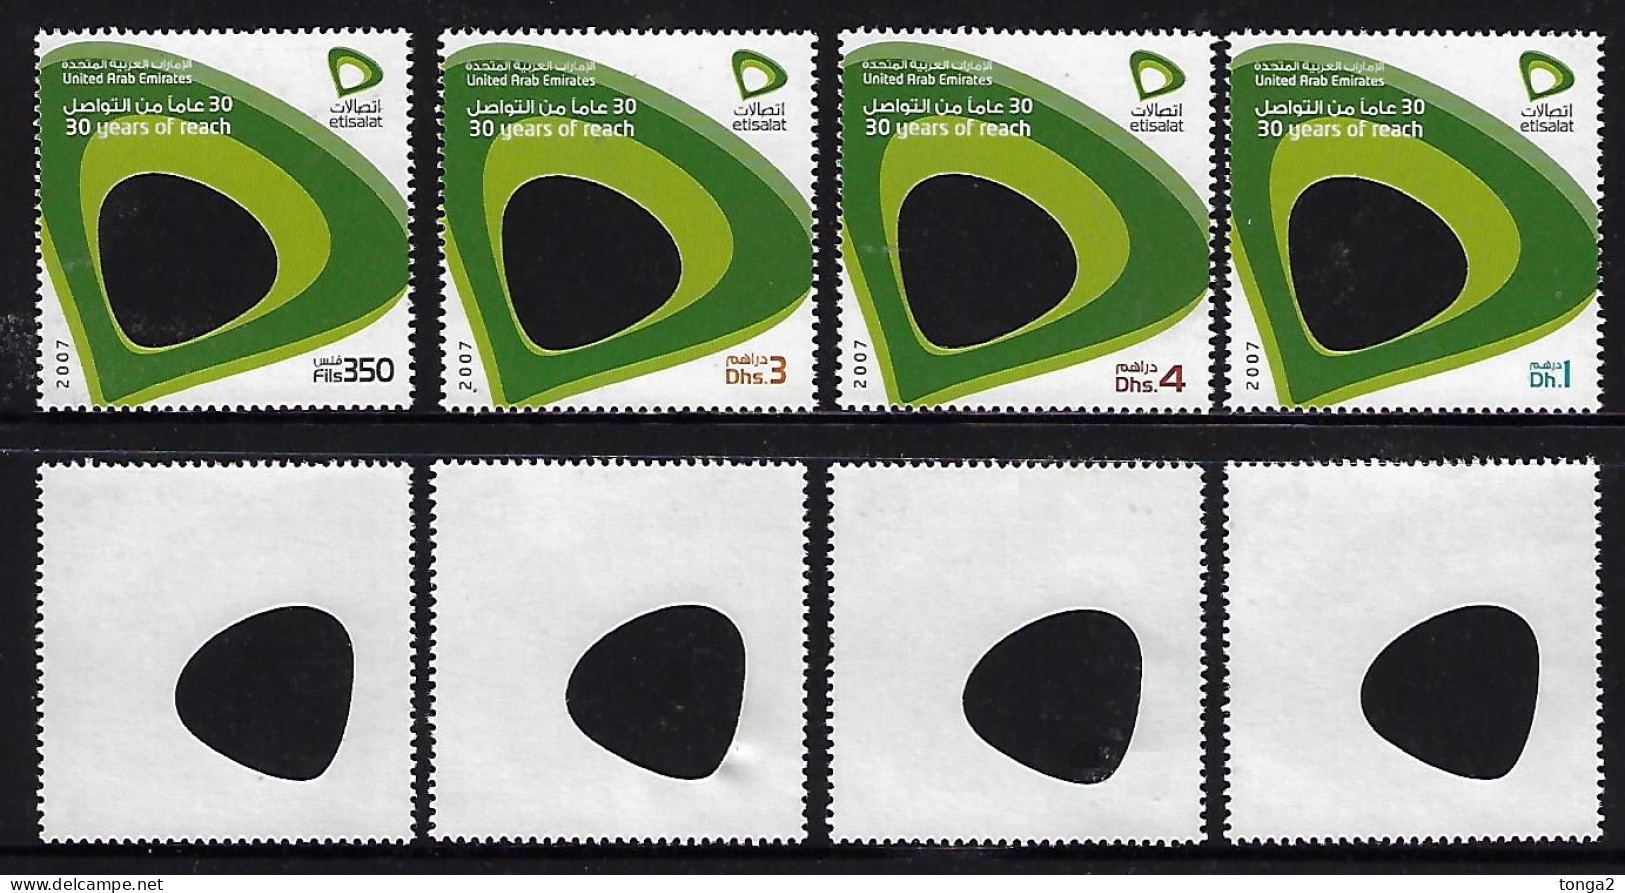 United Arab Emirates UAE - MNH 2007 Reach - Scarce - Holes In Each Stamp - Unusual Stamps - United Arab Emirates (General)